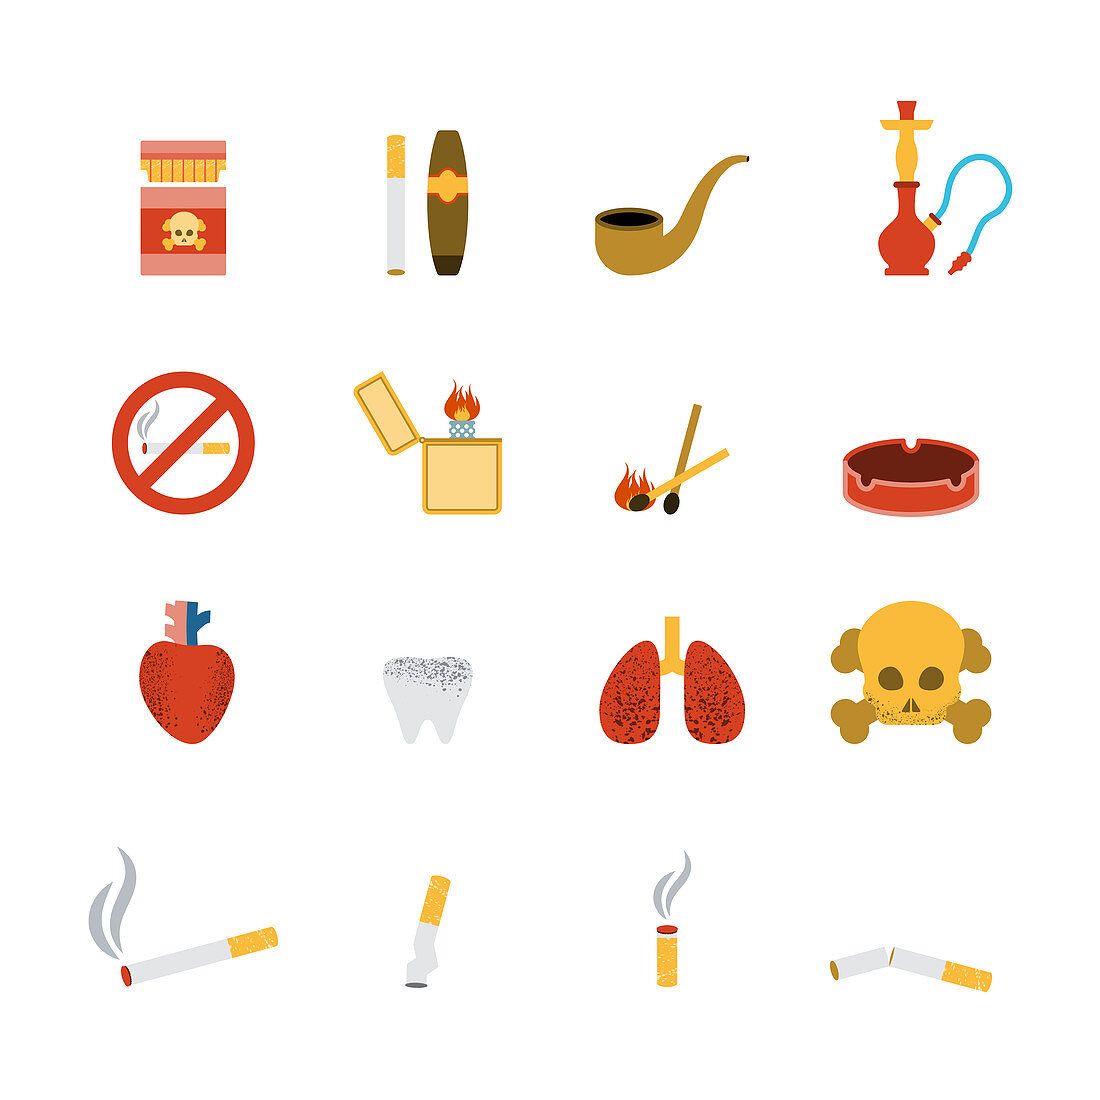 Smoking icons, illustration